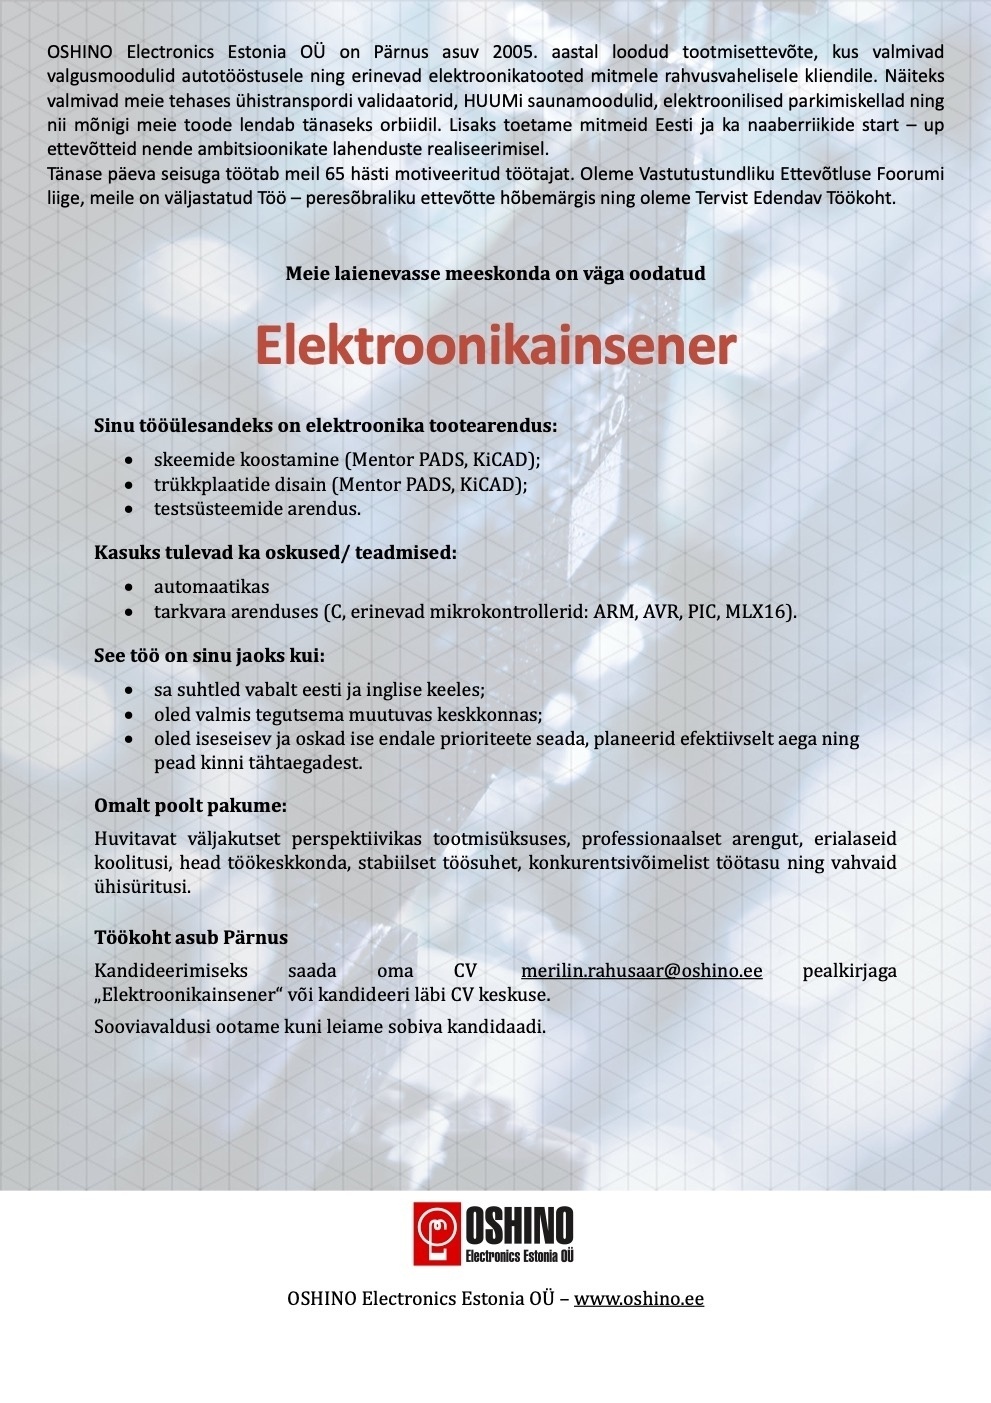 OSHINO ELECTRONICS ESTONIA OÜ Elektroonikainsener